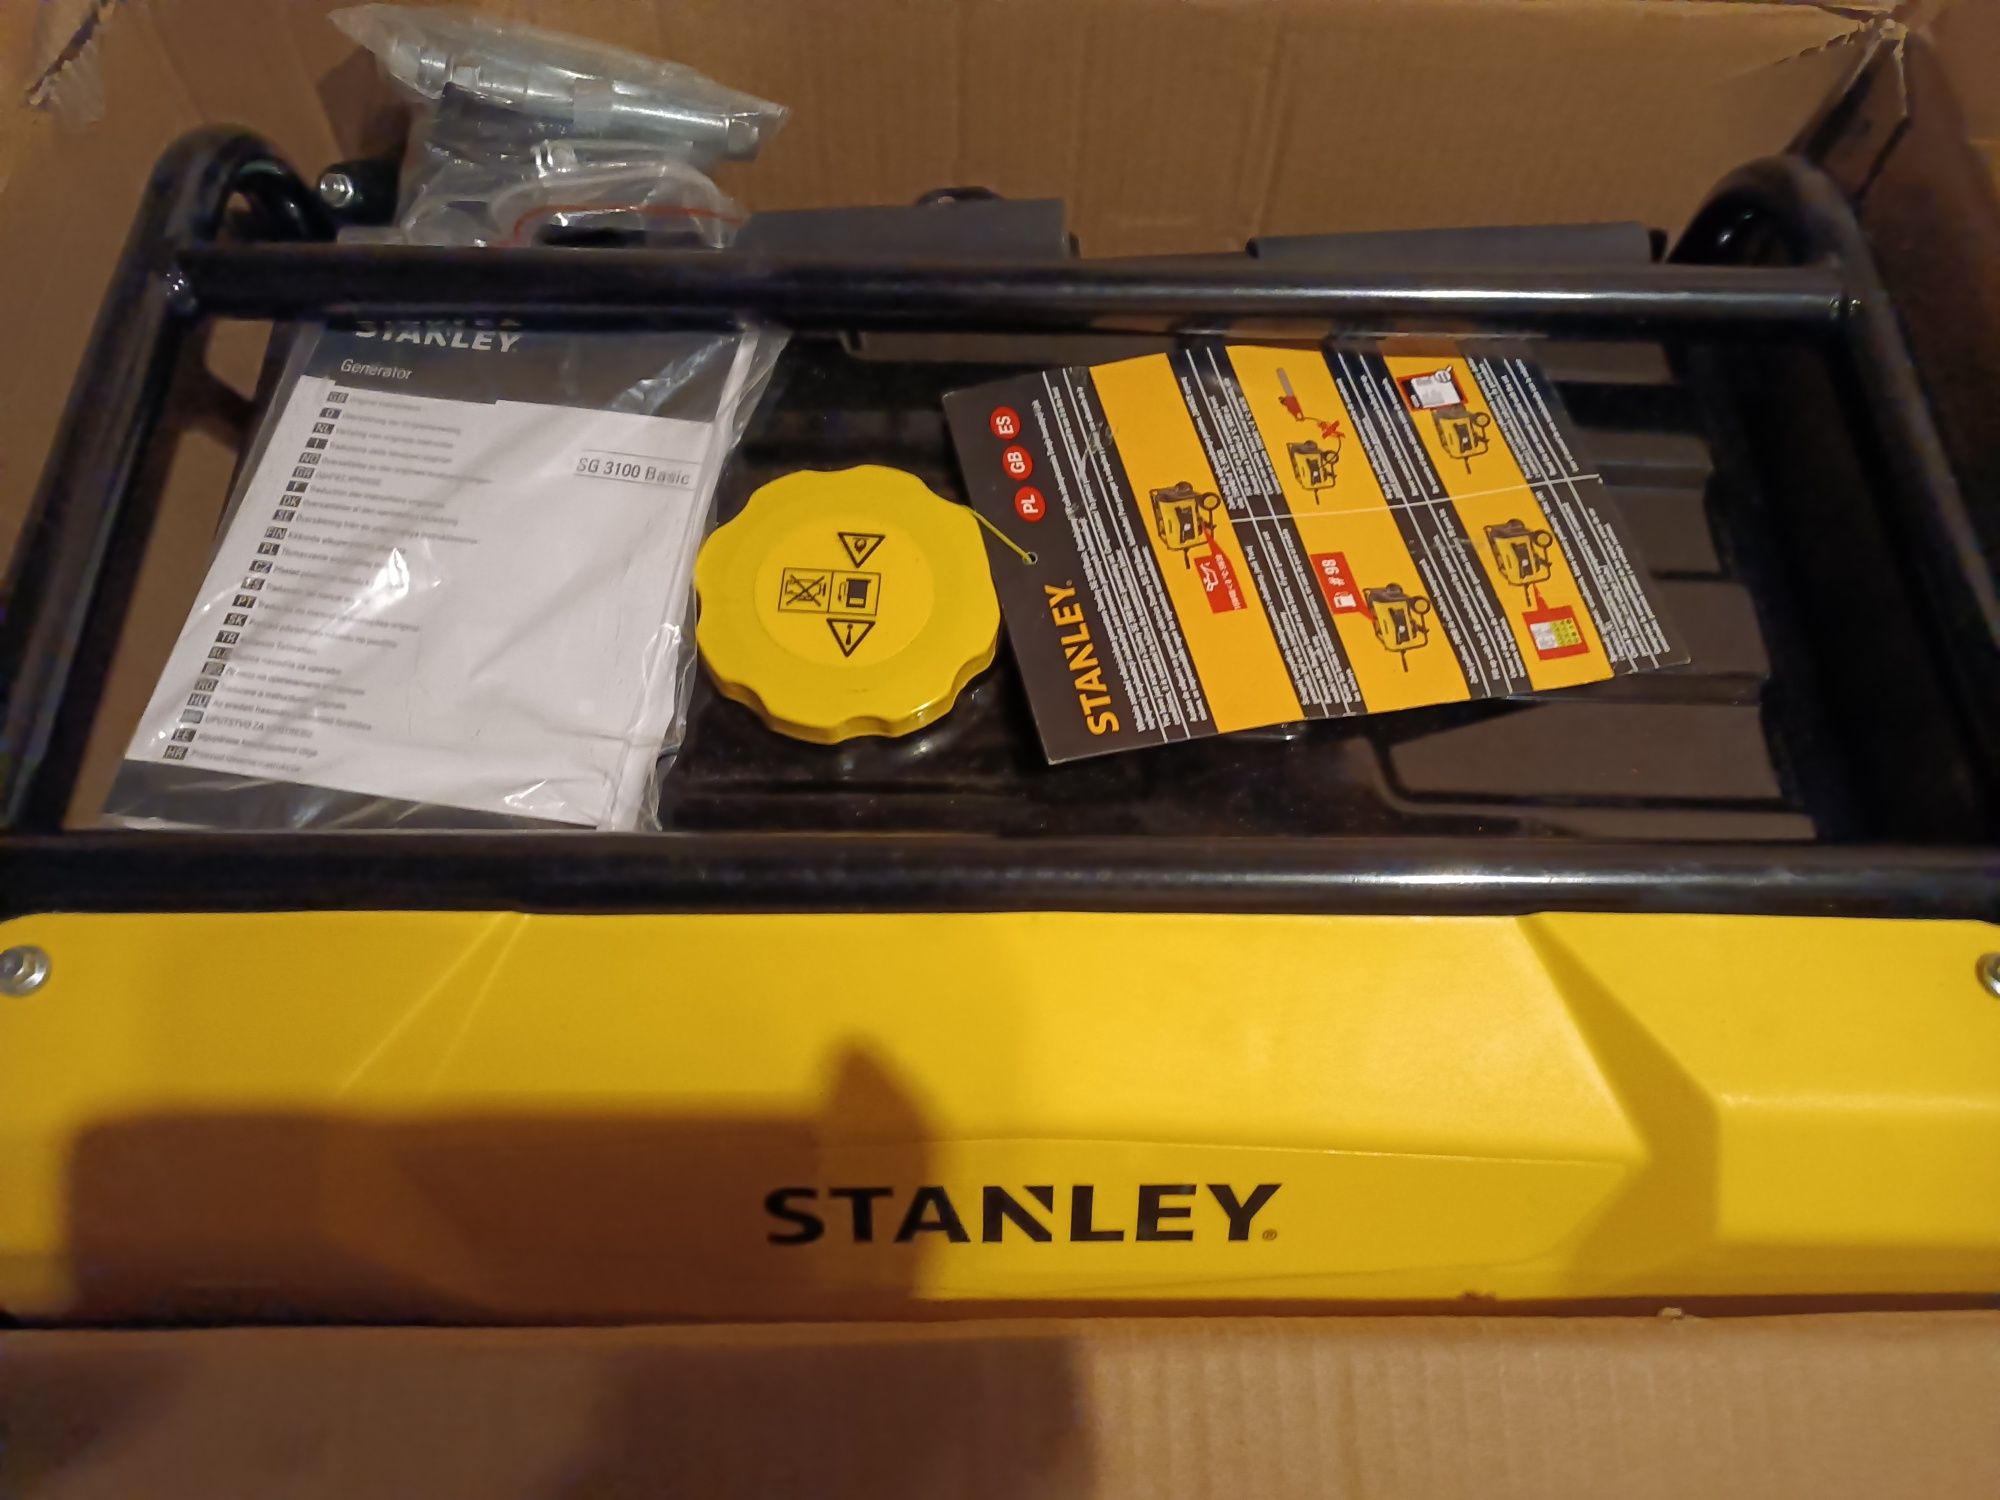 Stenly sg 3100 (2600-2900w)